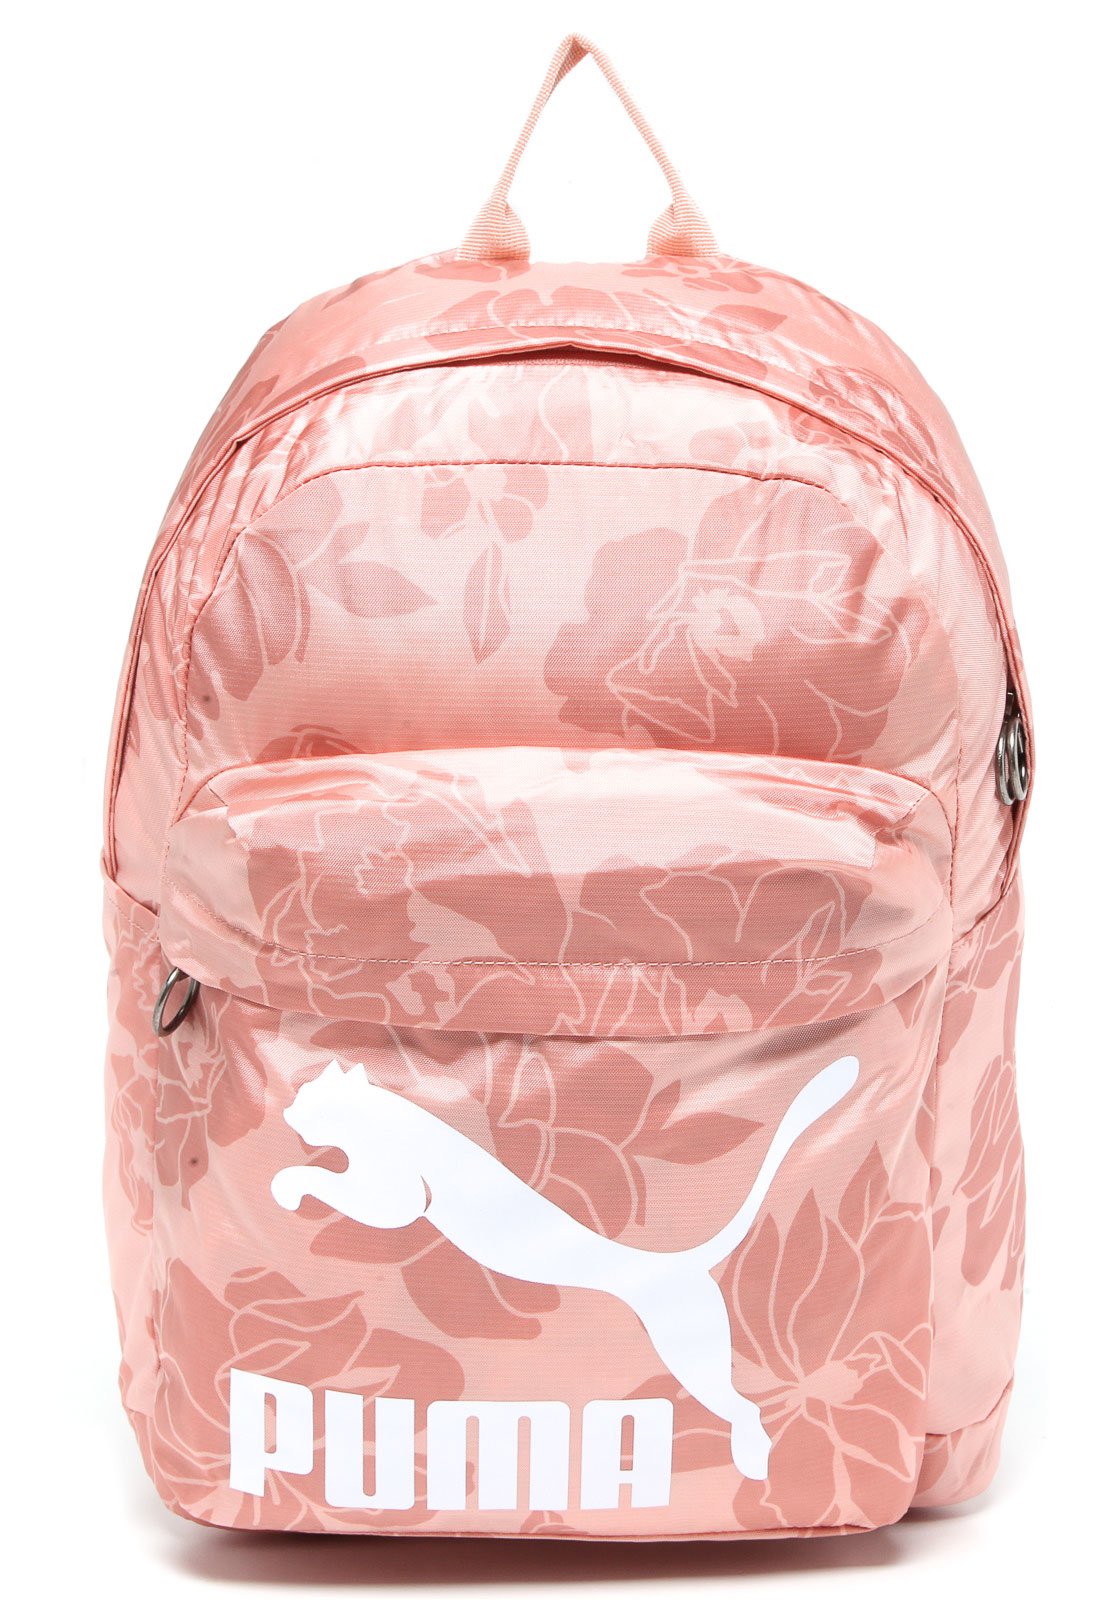 mochila escolar feminina puma